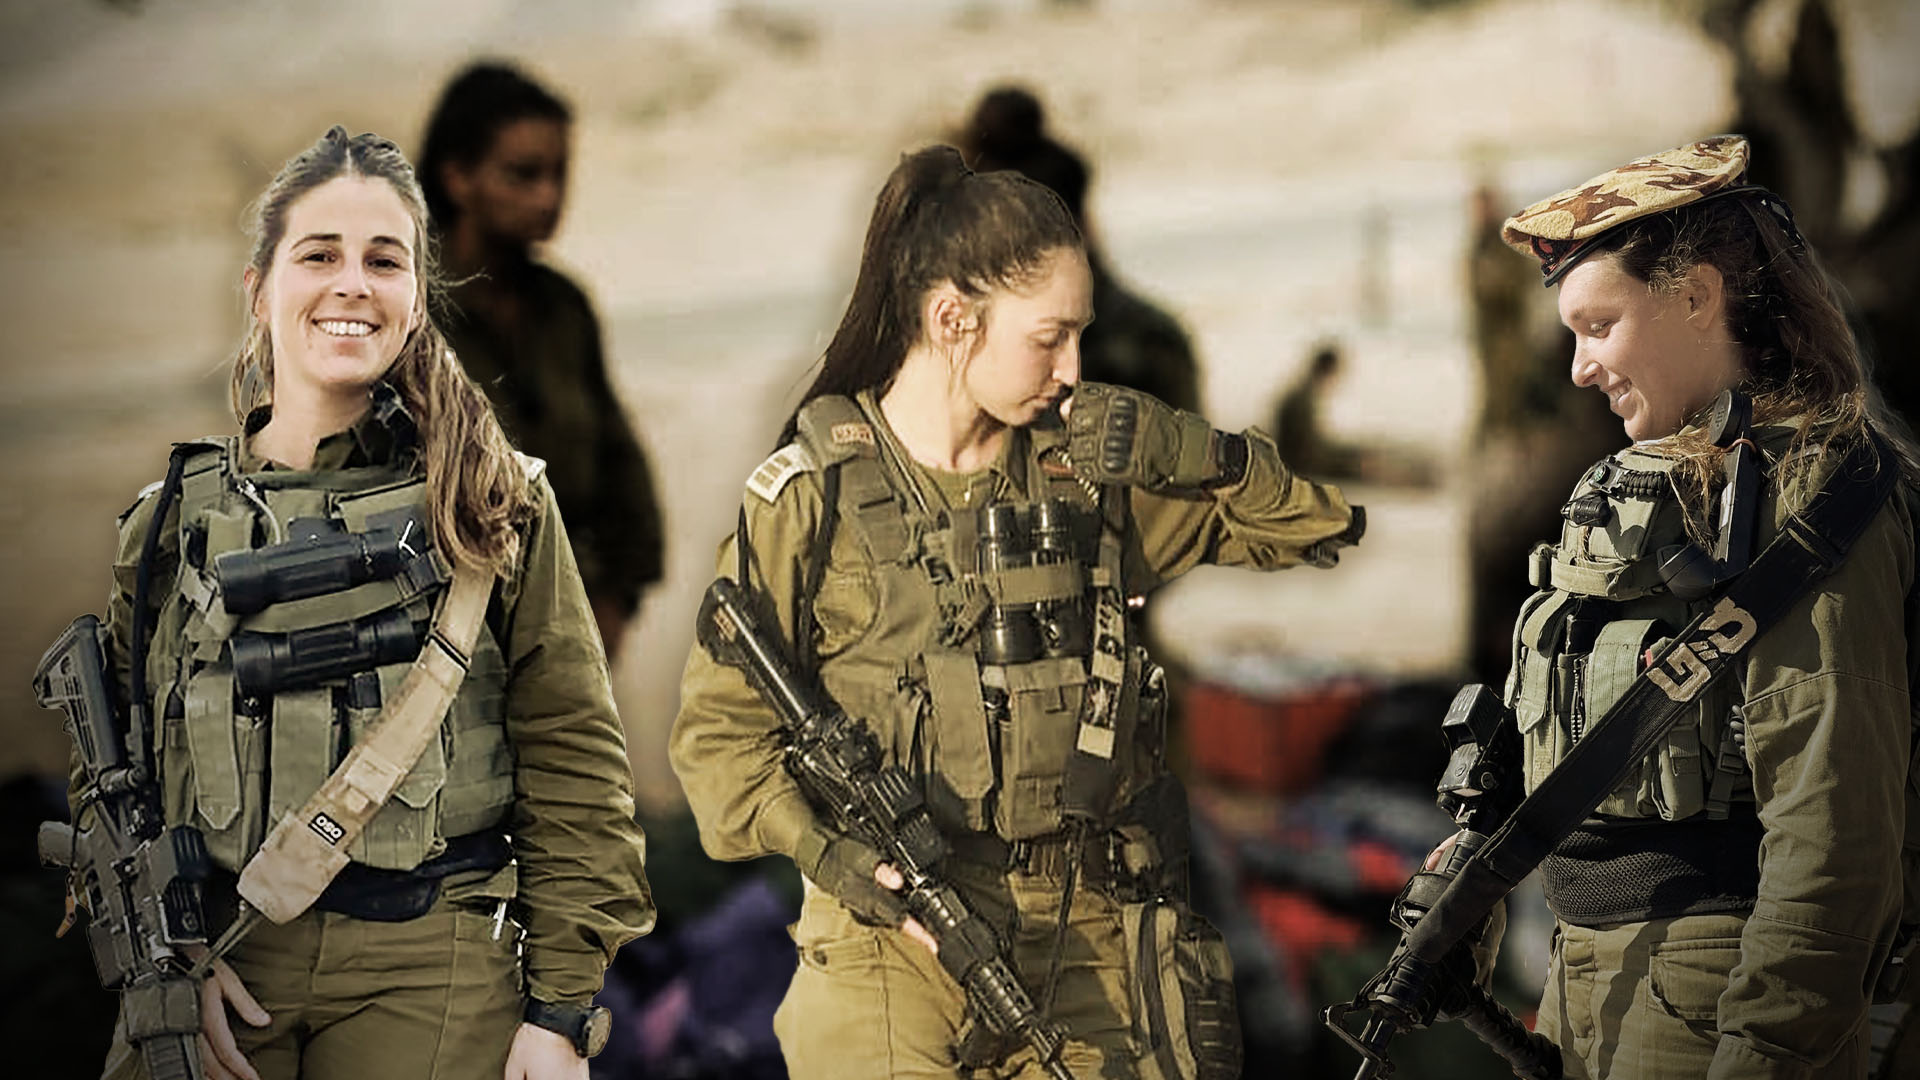 Israeli Woman Soldier